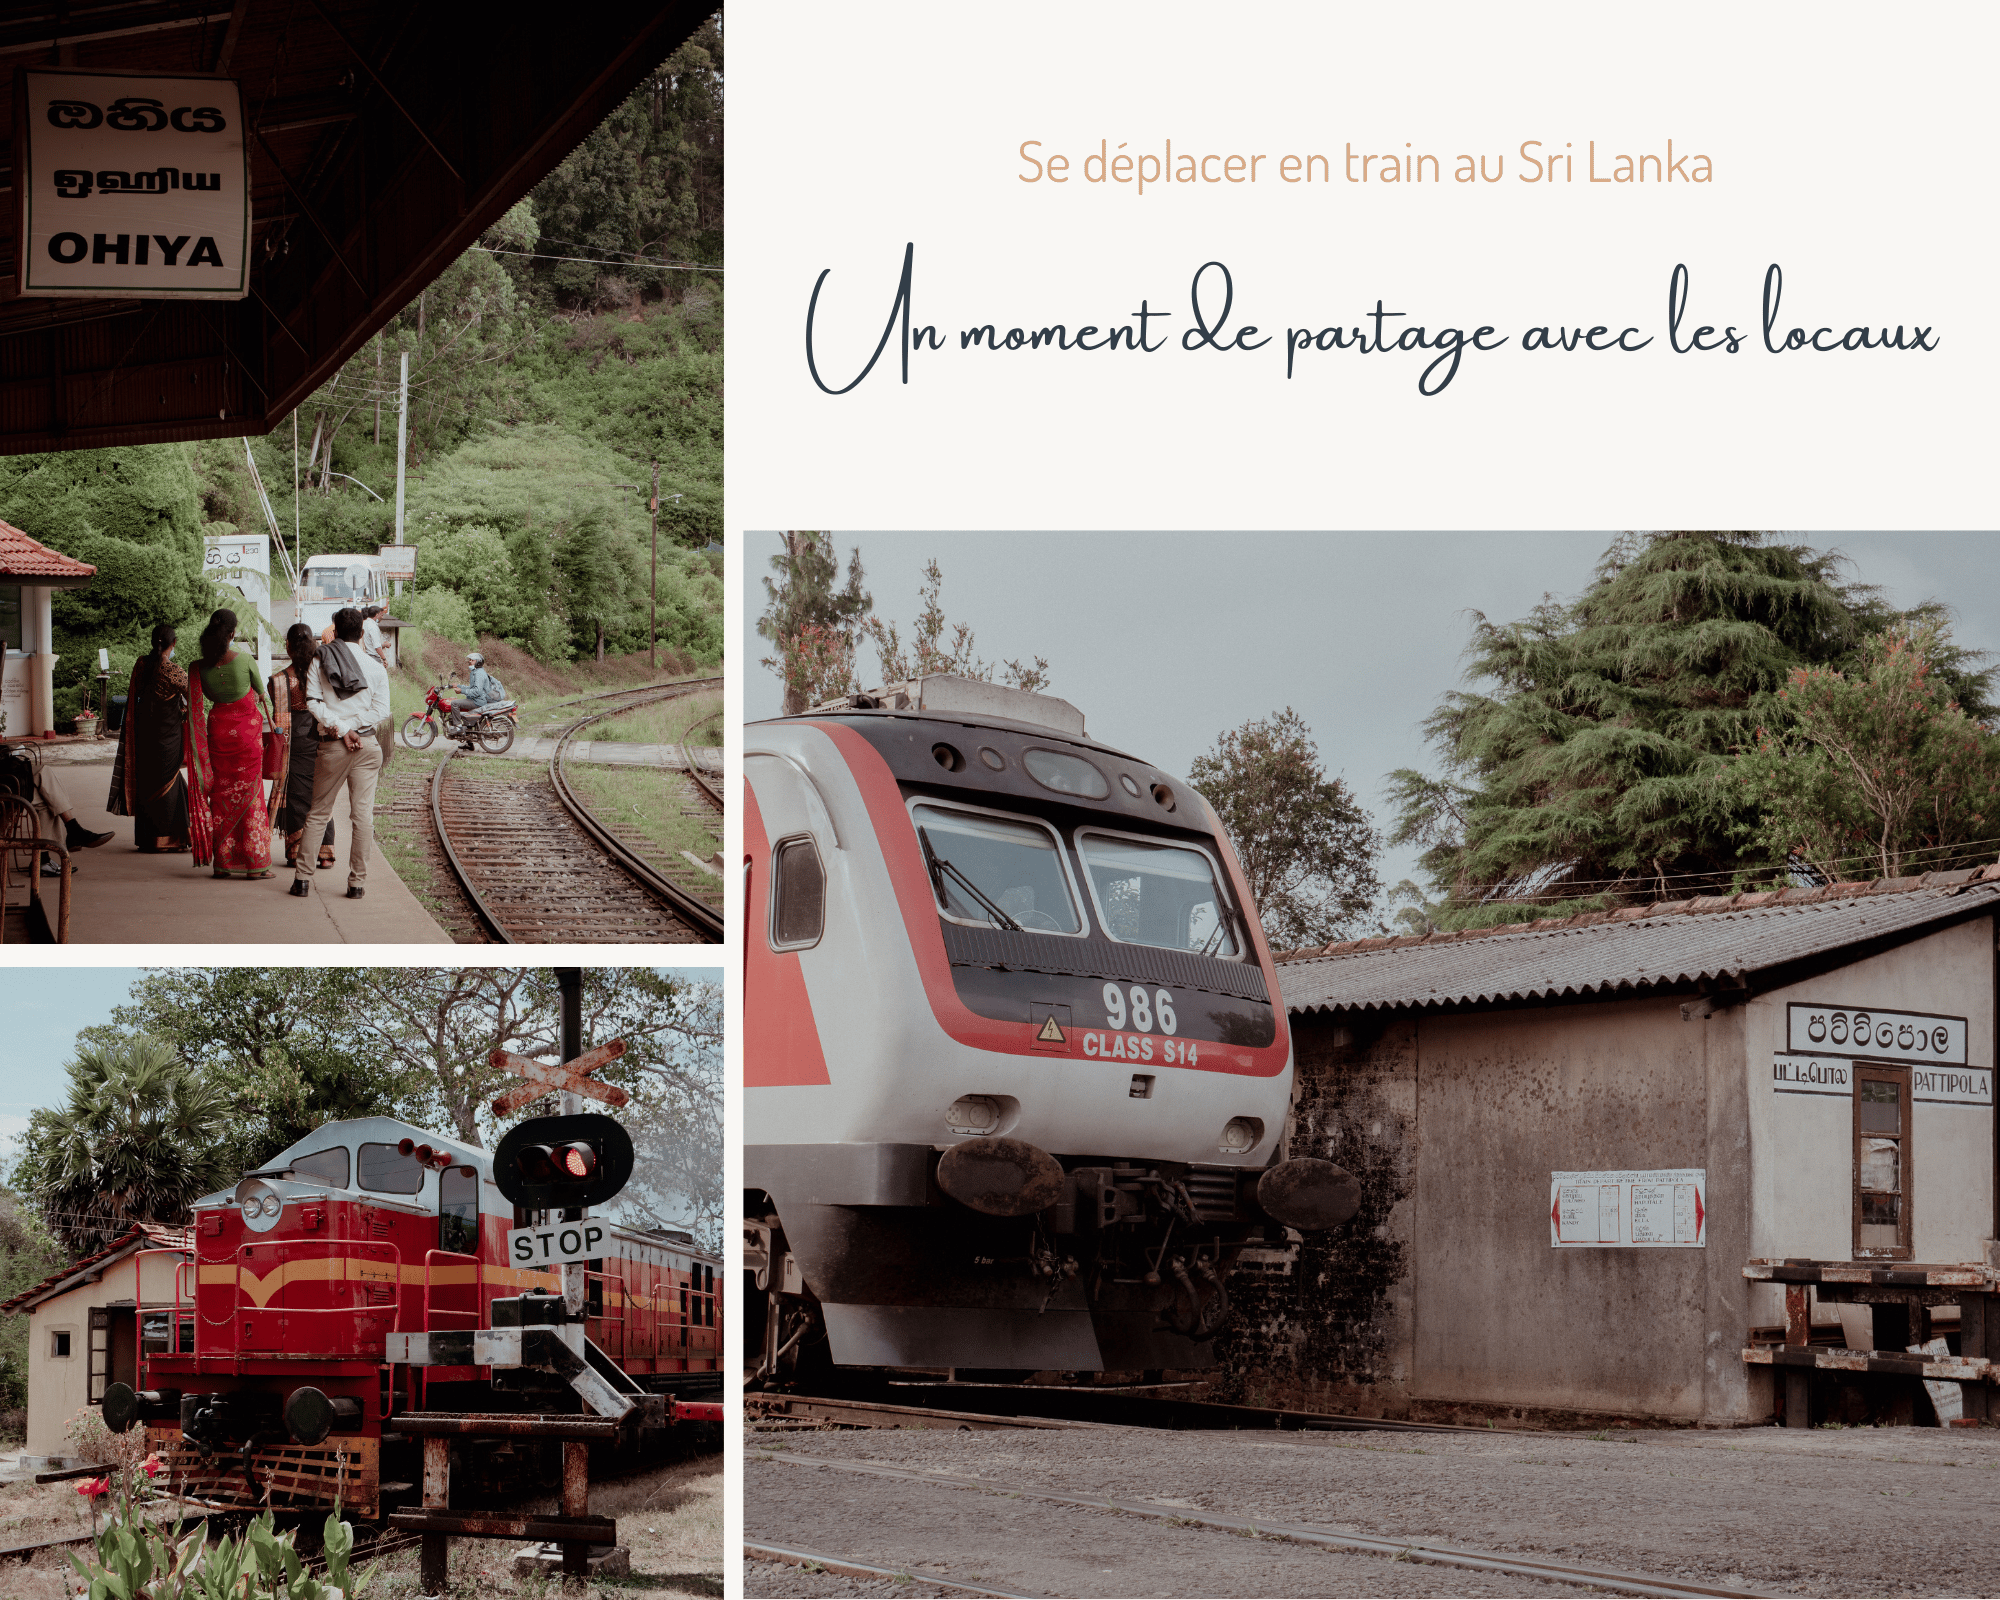 se déplacer en train au Sri Lanka blog voyage comment circuler au Sri Lanka